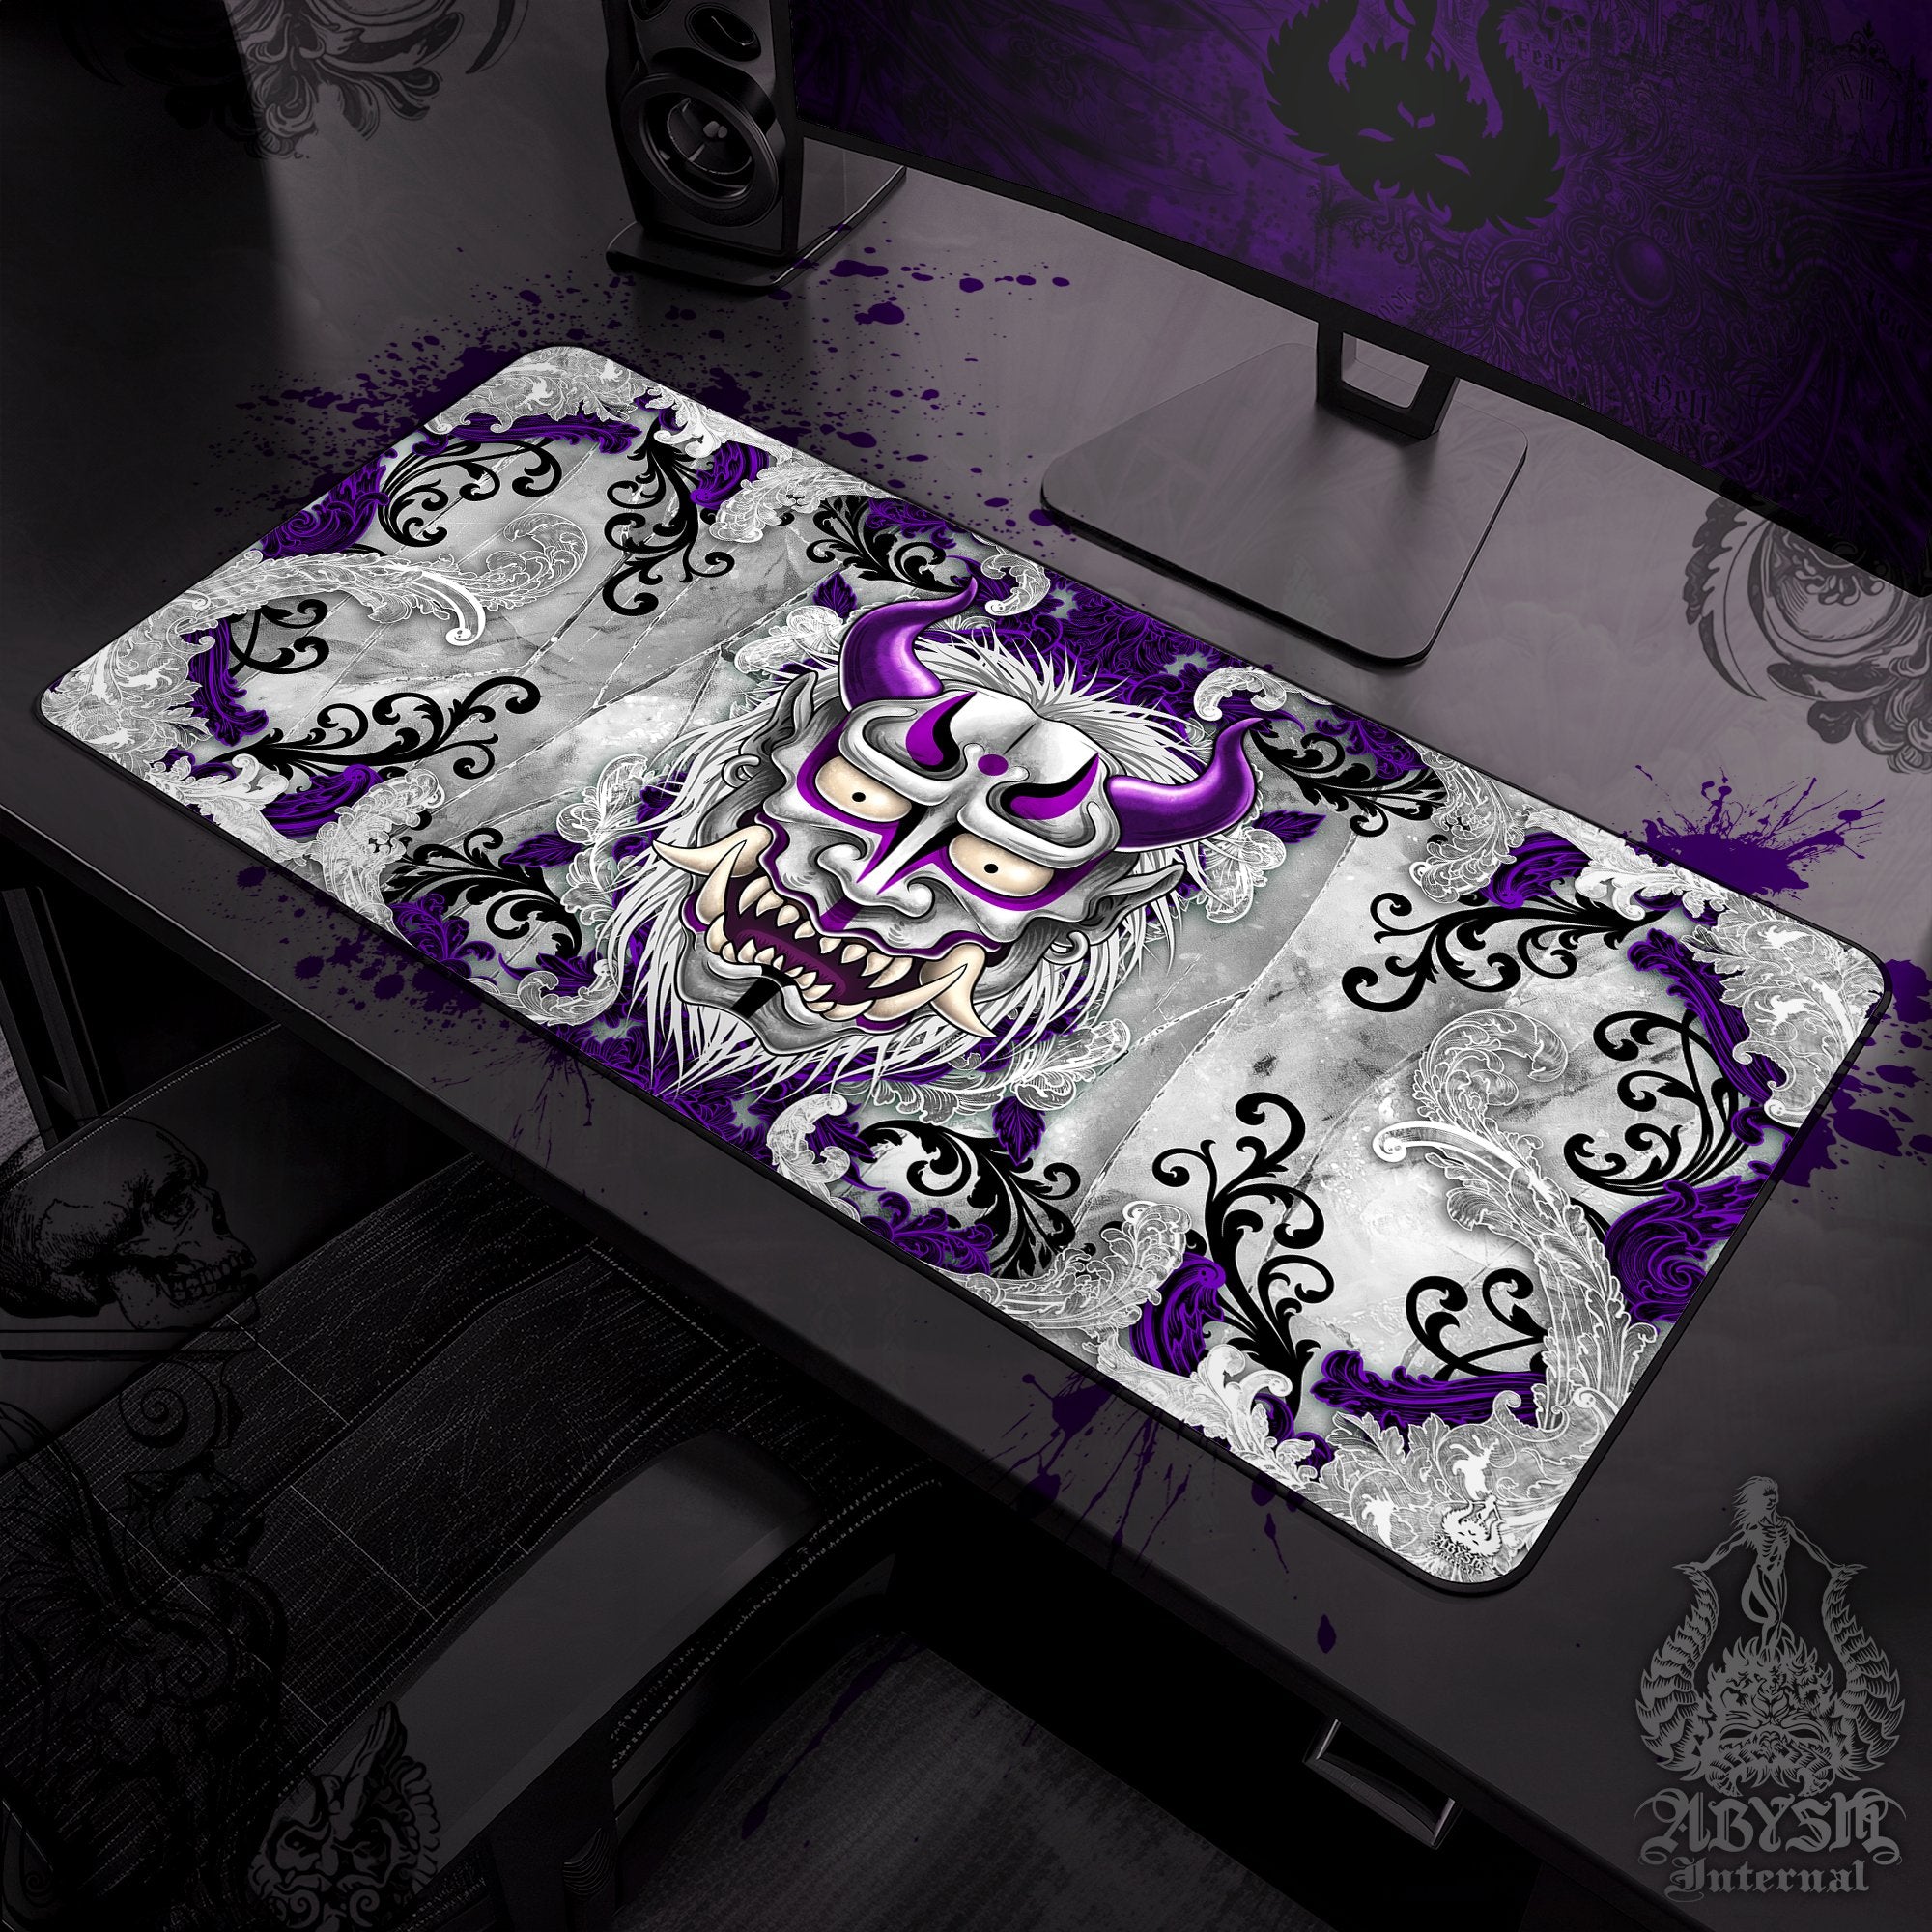 White Oni Gaming Mouse Pad, Japanese Demon Desk Mat, Gamer Table Protector Cover, Goth Purple Workpad, Anime Yokai Art Print - 2 Colors - Abysm Internal